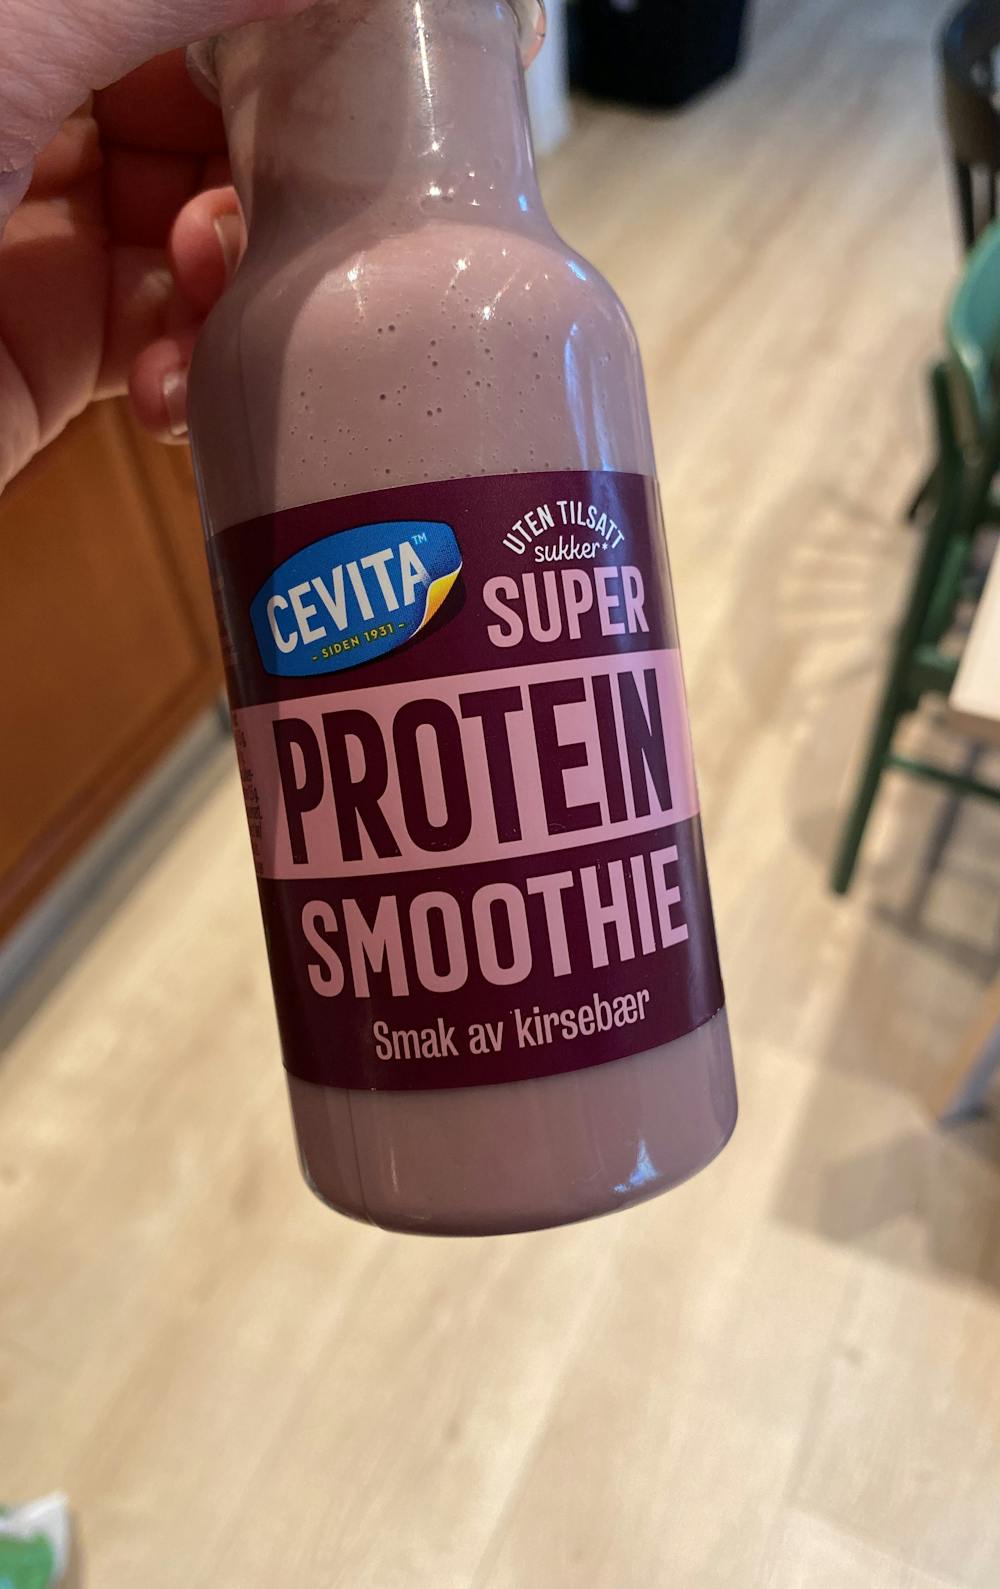 Super protein smoothie kirsebær, Cevita